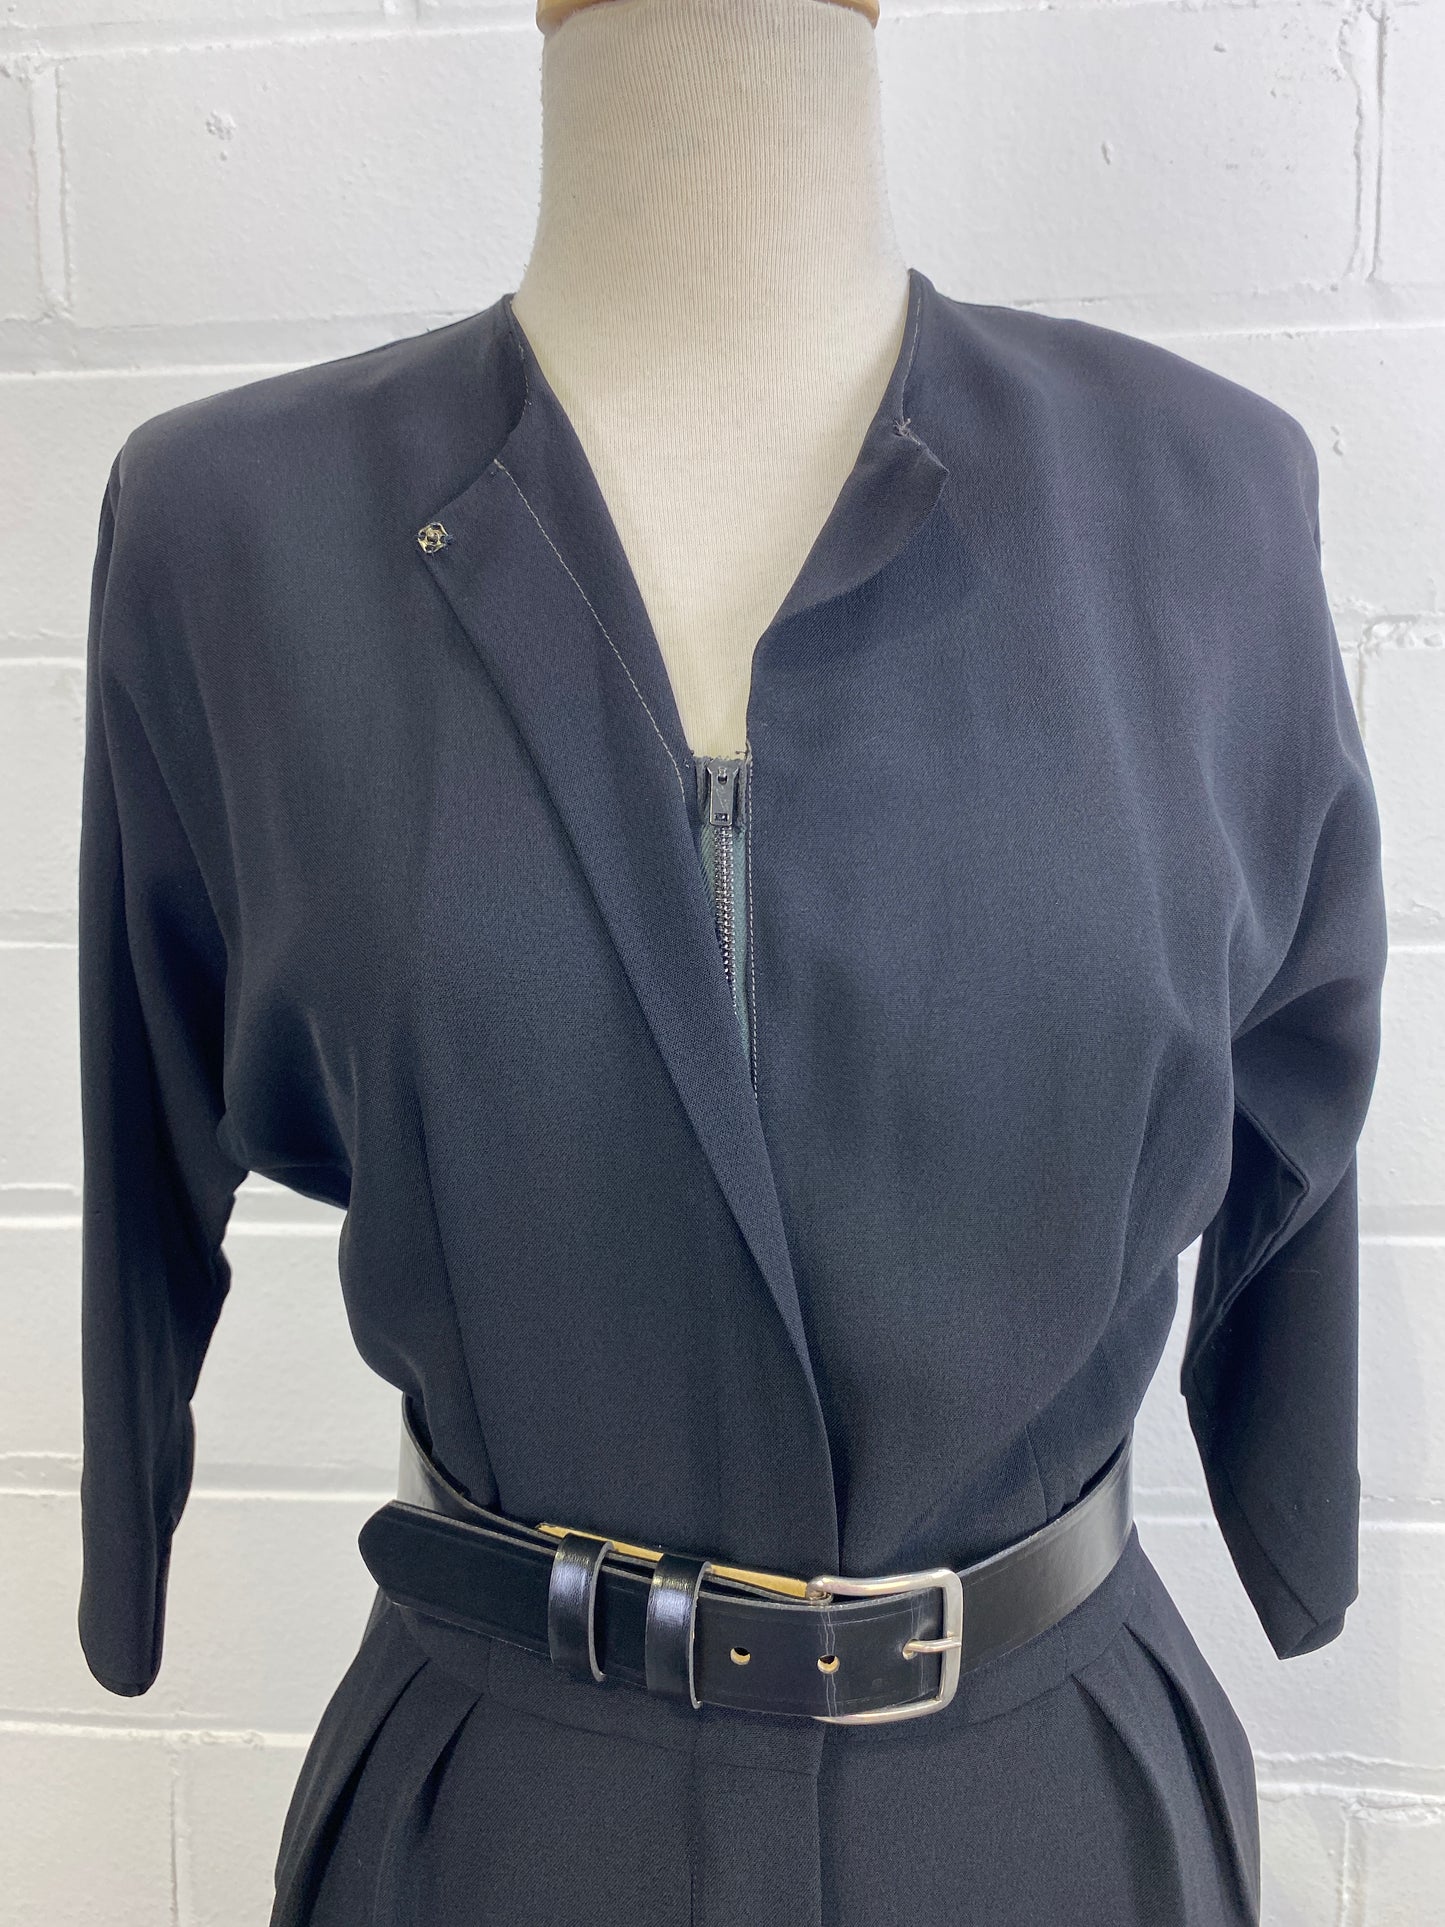 Vintage 1950s Minimalist Black Zip Day Dress, Small 